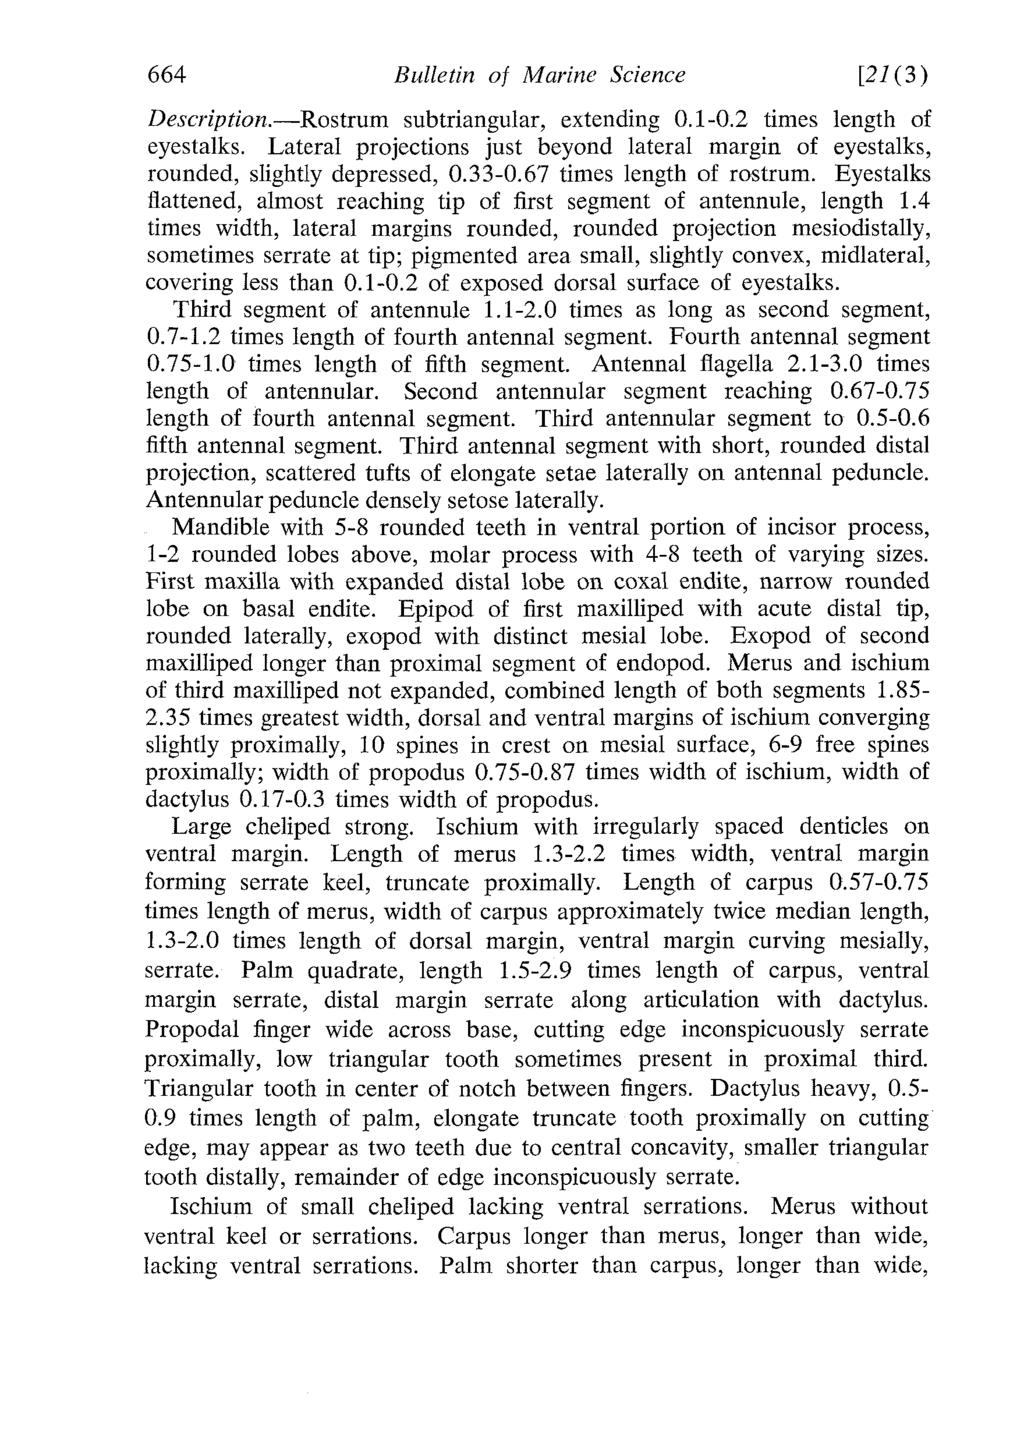 664 Bulletin of Marine Science [2/(3) Description. Rostrum subtriangular, extending 0.1-0.2 times length of eyestalks.